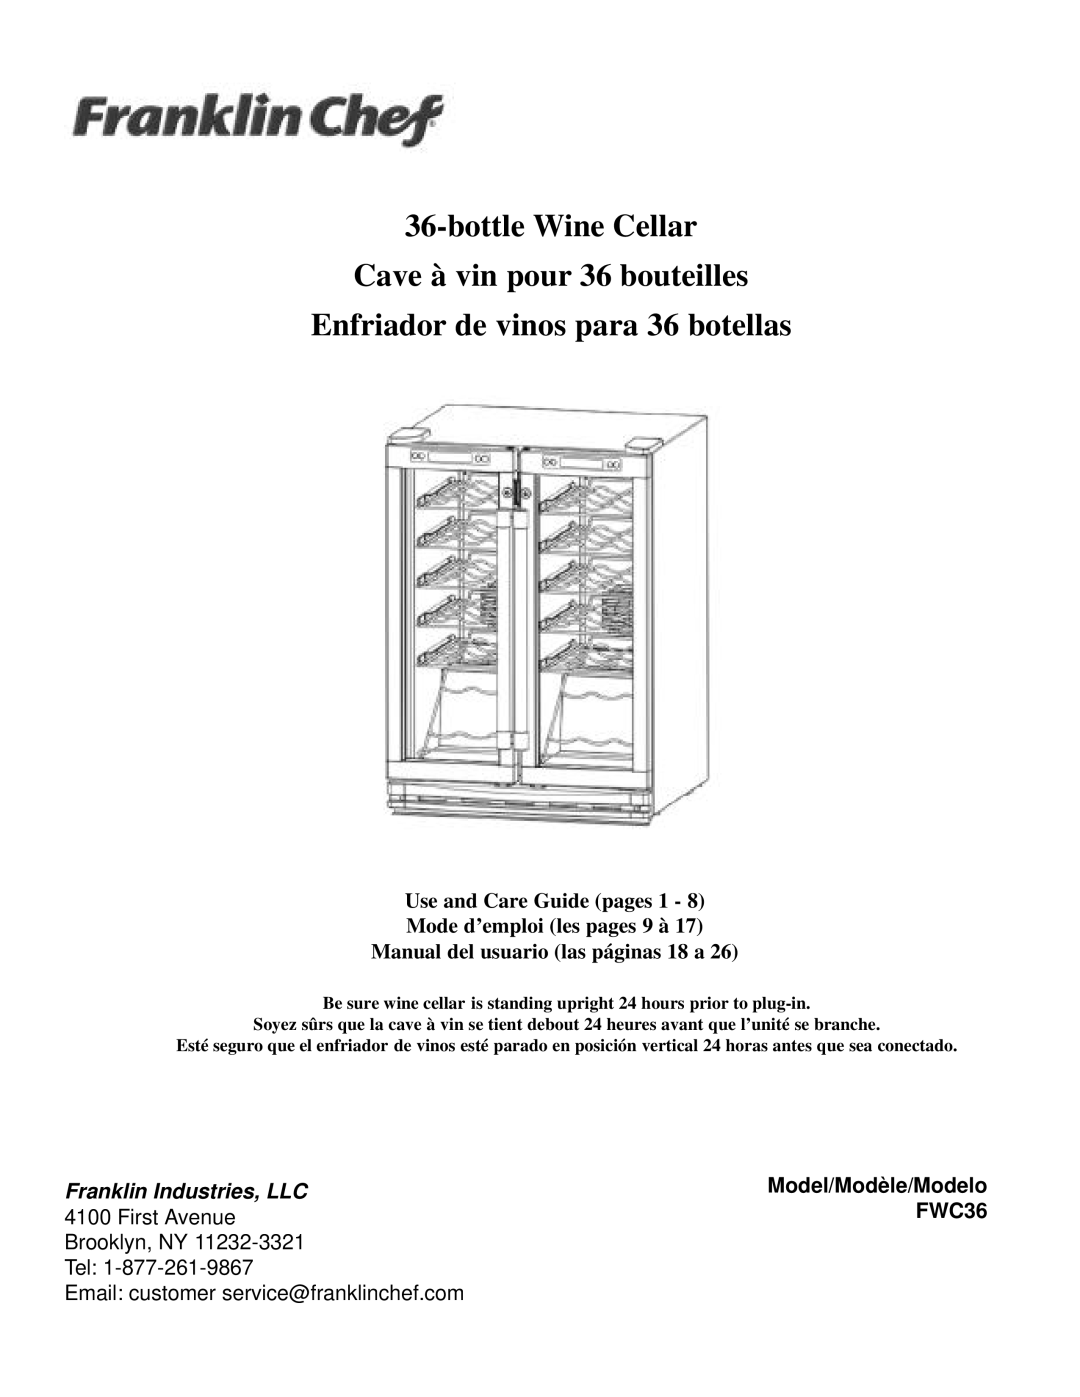 Franklin Industries, L.L.C FWC36 manual bottleWine Cellar, Cave à vin pour 36 bouteilles, Use and Care Guide pages 